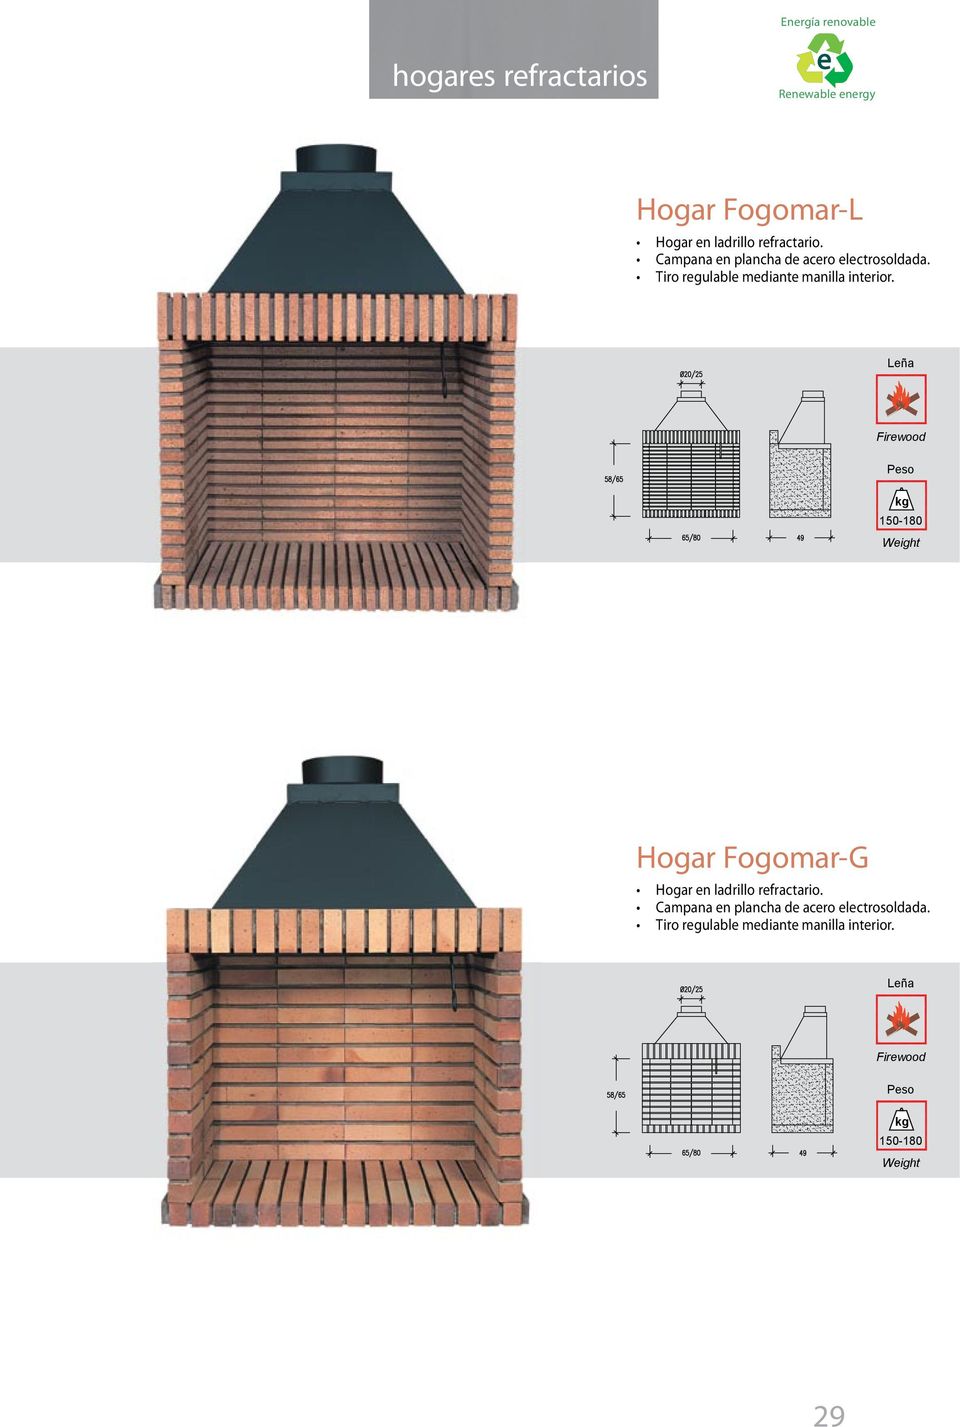 Adjustable draught control by means of interior handle. Hogar Fogomar-G Hogar en ladrillo refractario.